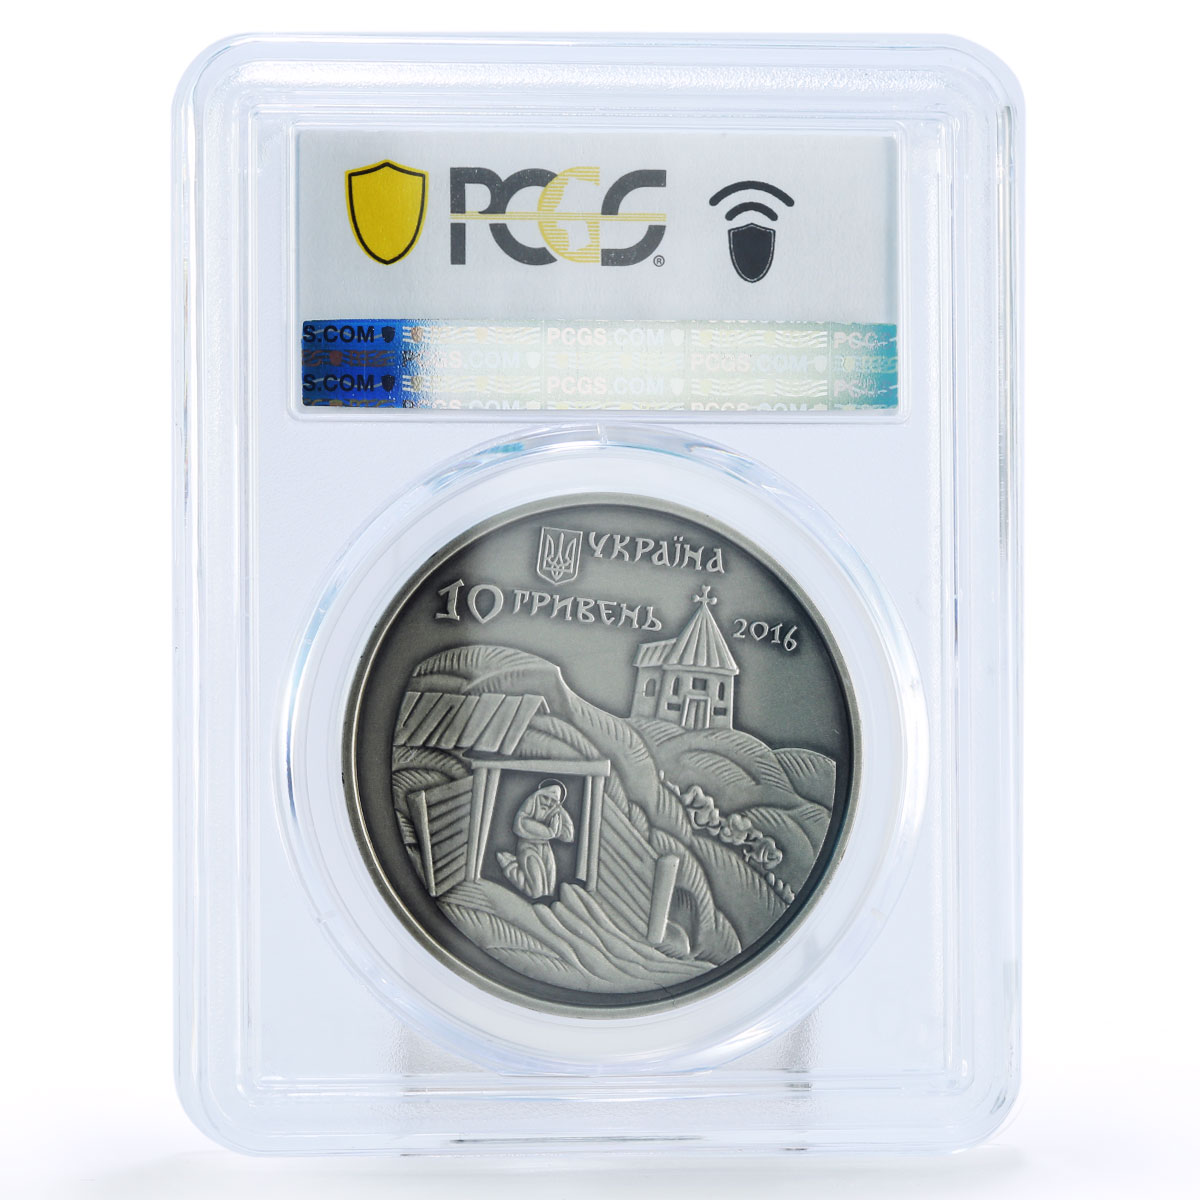 Ukraine 10 hryvnias St Theodosius of Caves Church Lavra MS70 PCGS Ag coin 2016